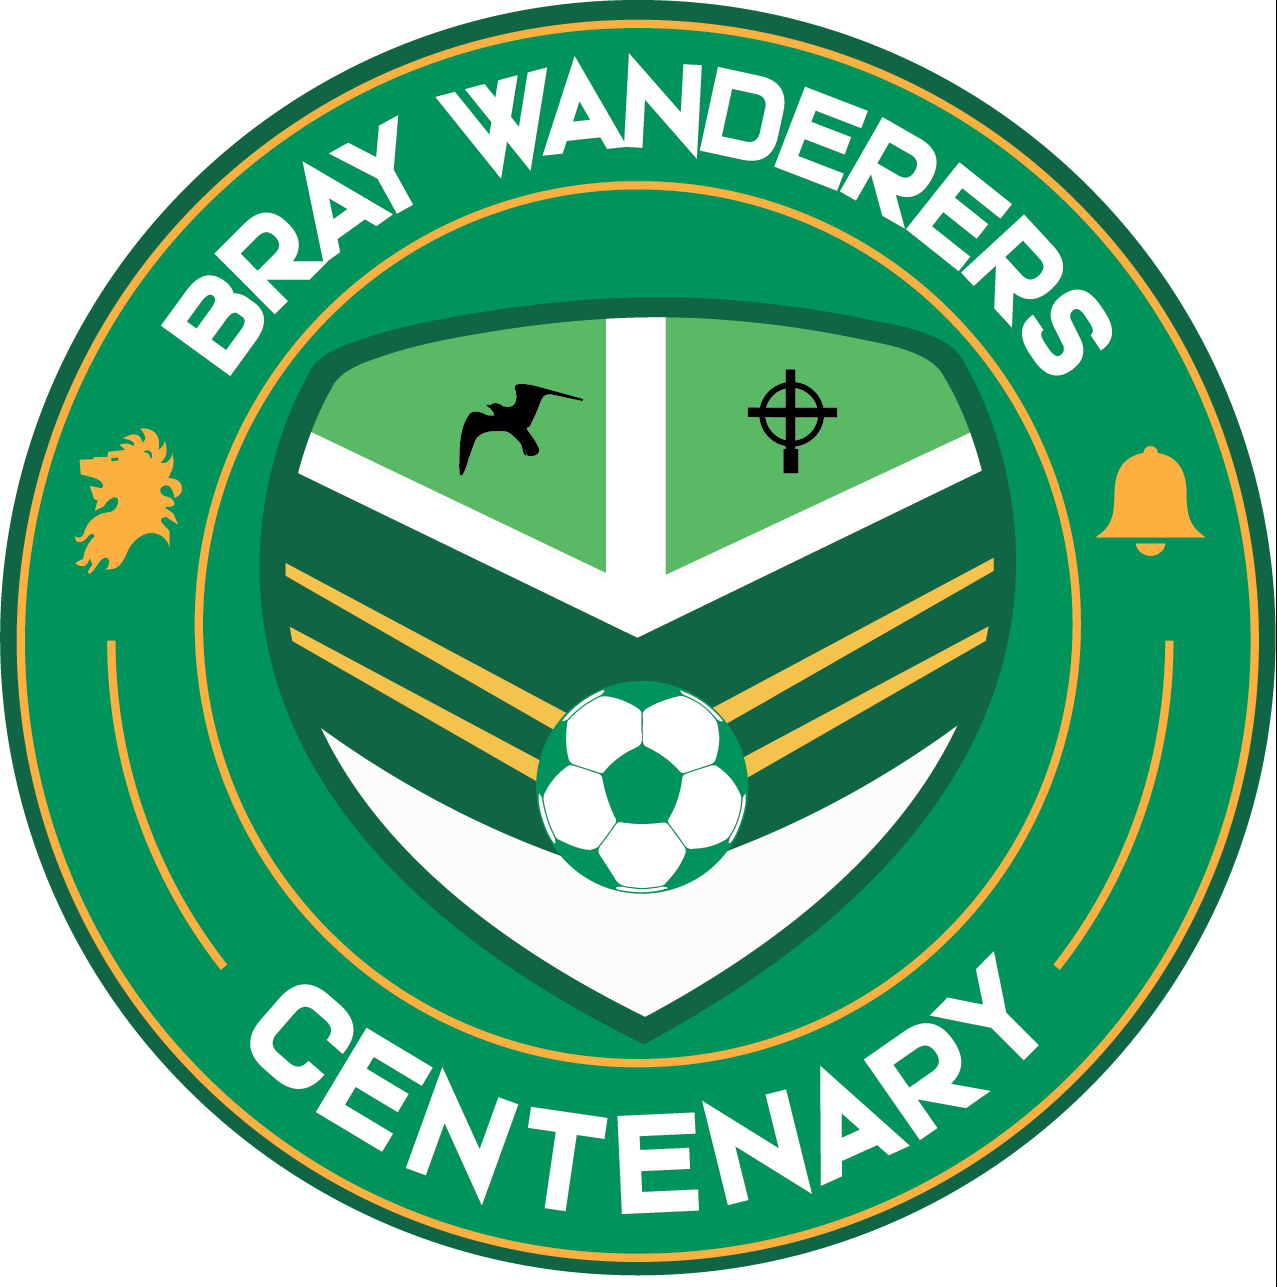 Bray Wanderers mini world cup - Bray Wanderers FC